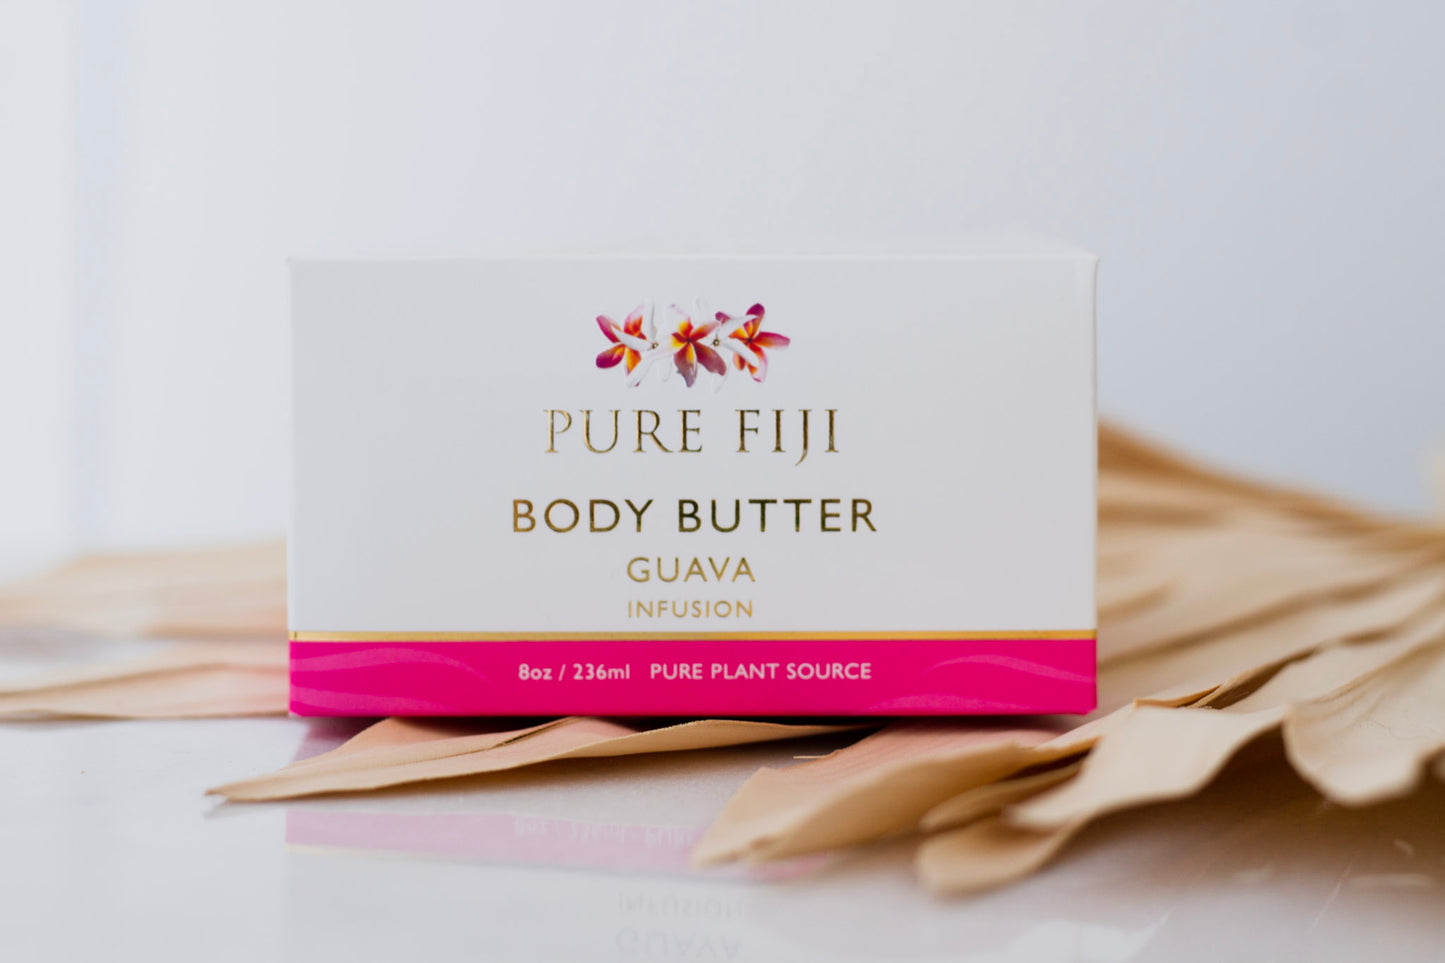 Pure Fiji Body Butter Guava 236ml